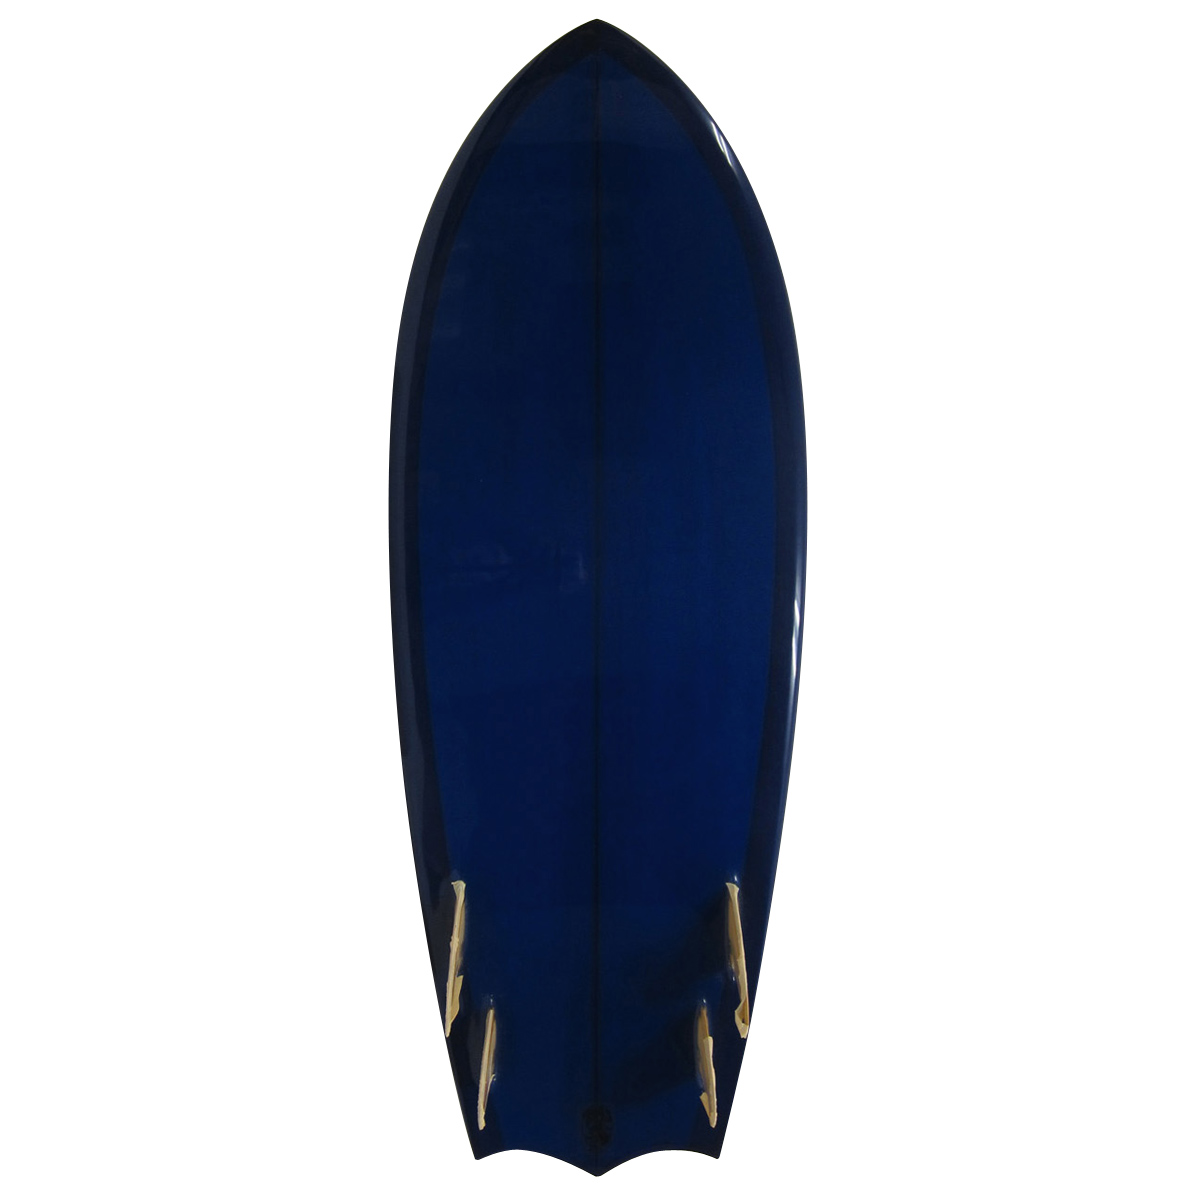 EC Surfboards / Yo Mobile Neo Classics 4`11